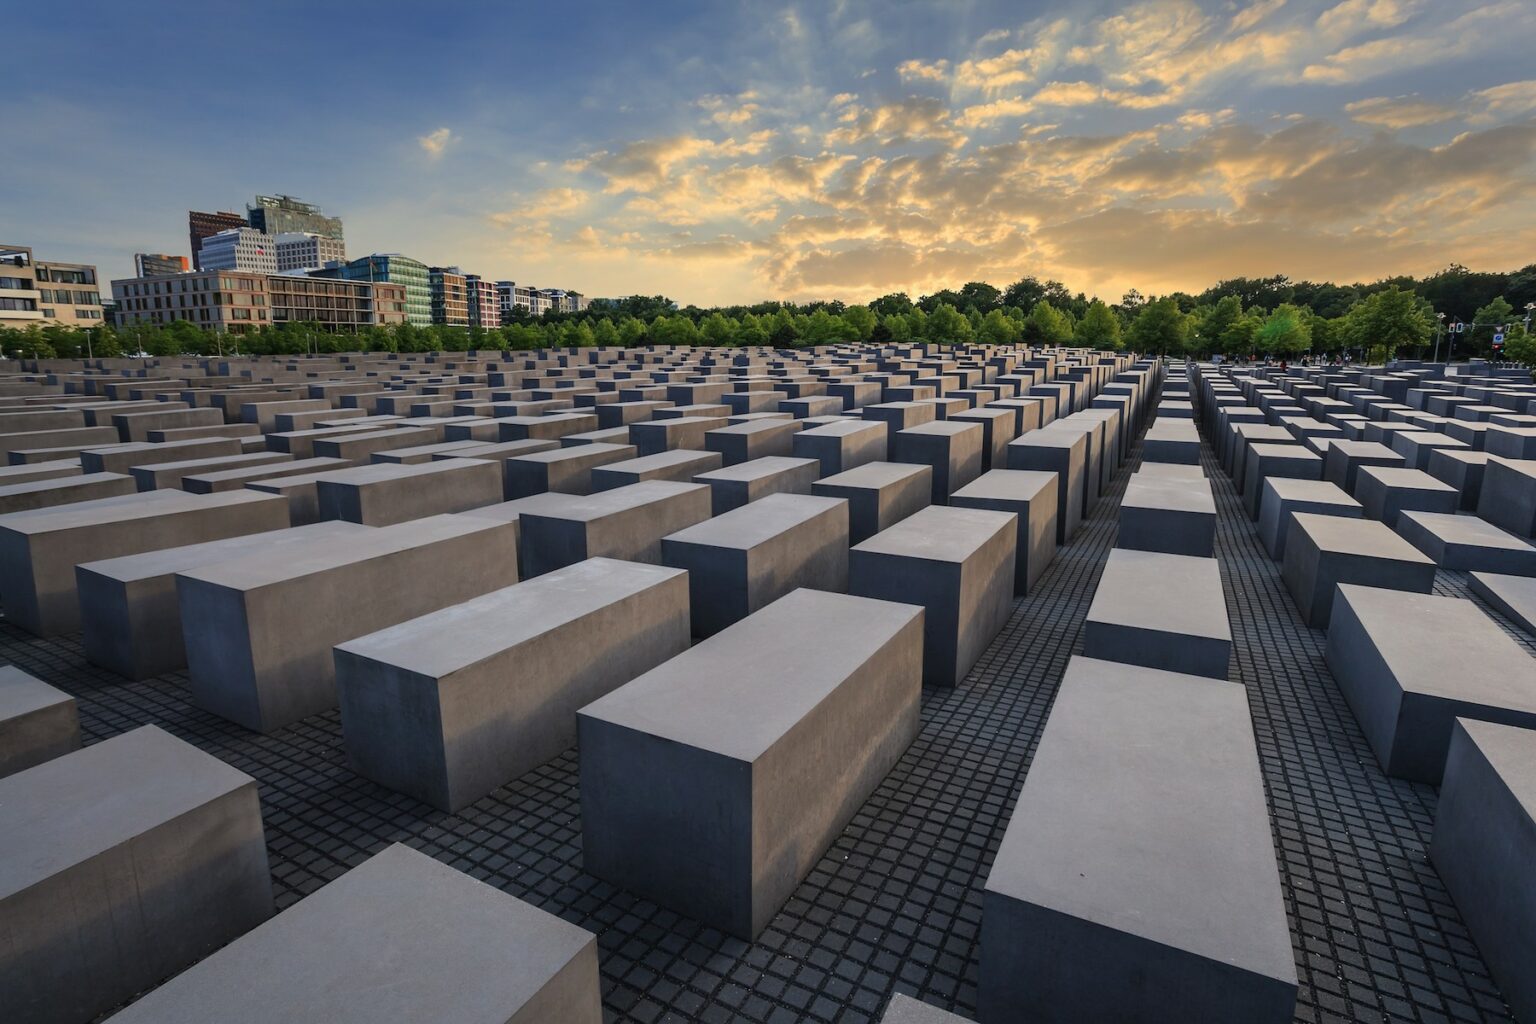 The Holocaust Memorial – Berlin